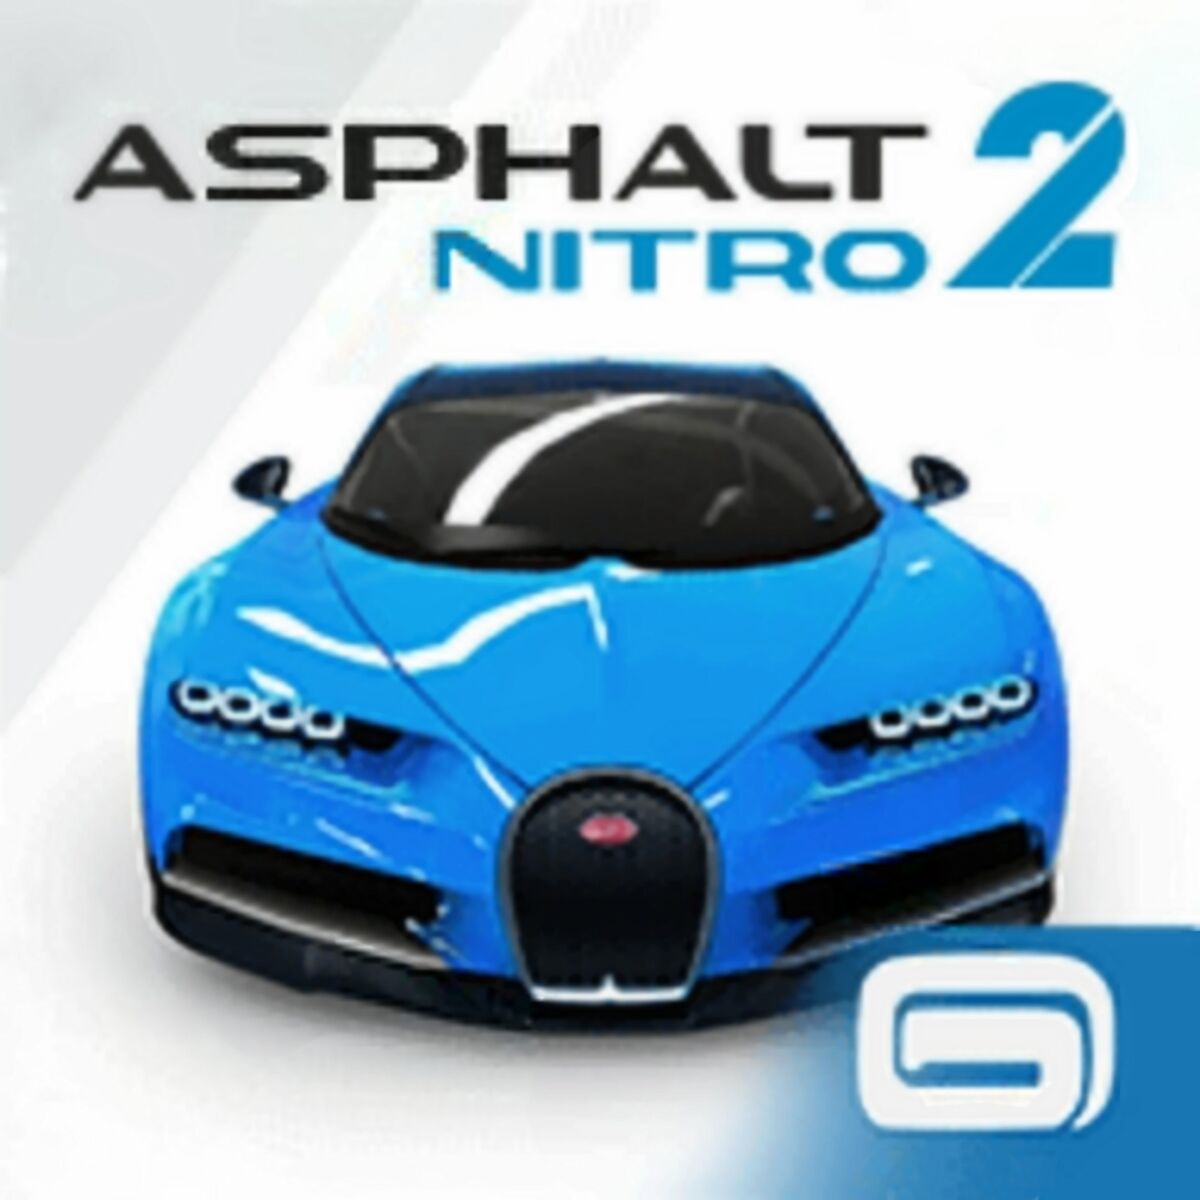 Asphalt Nitro for Android - Free App Download